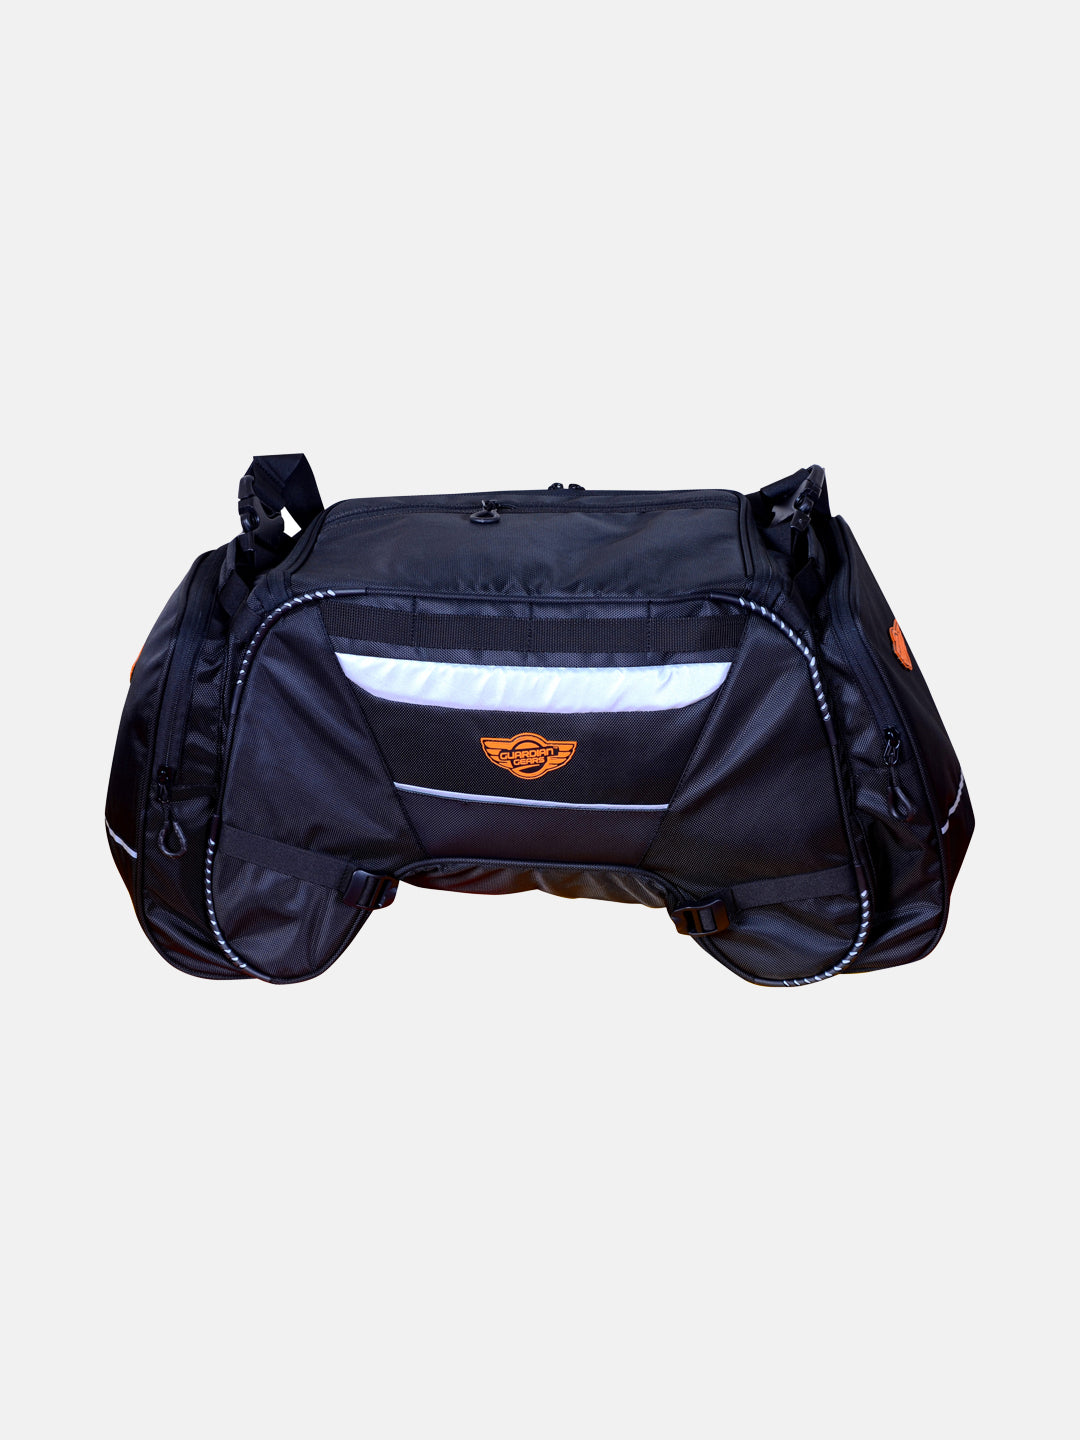 Guardian Gears Rhino Tail Bag